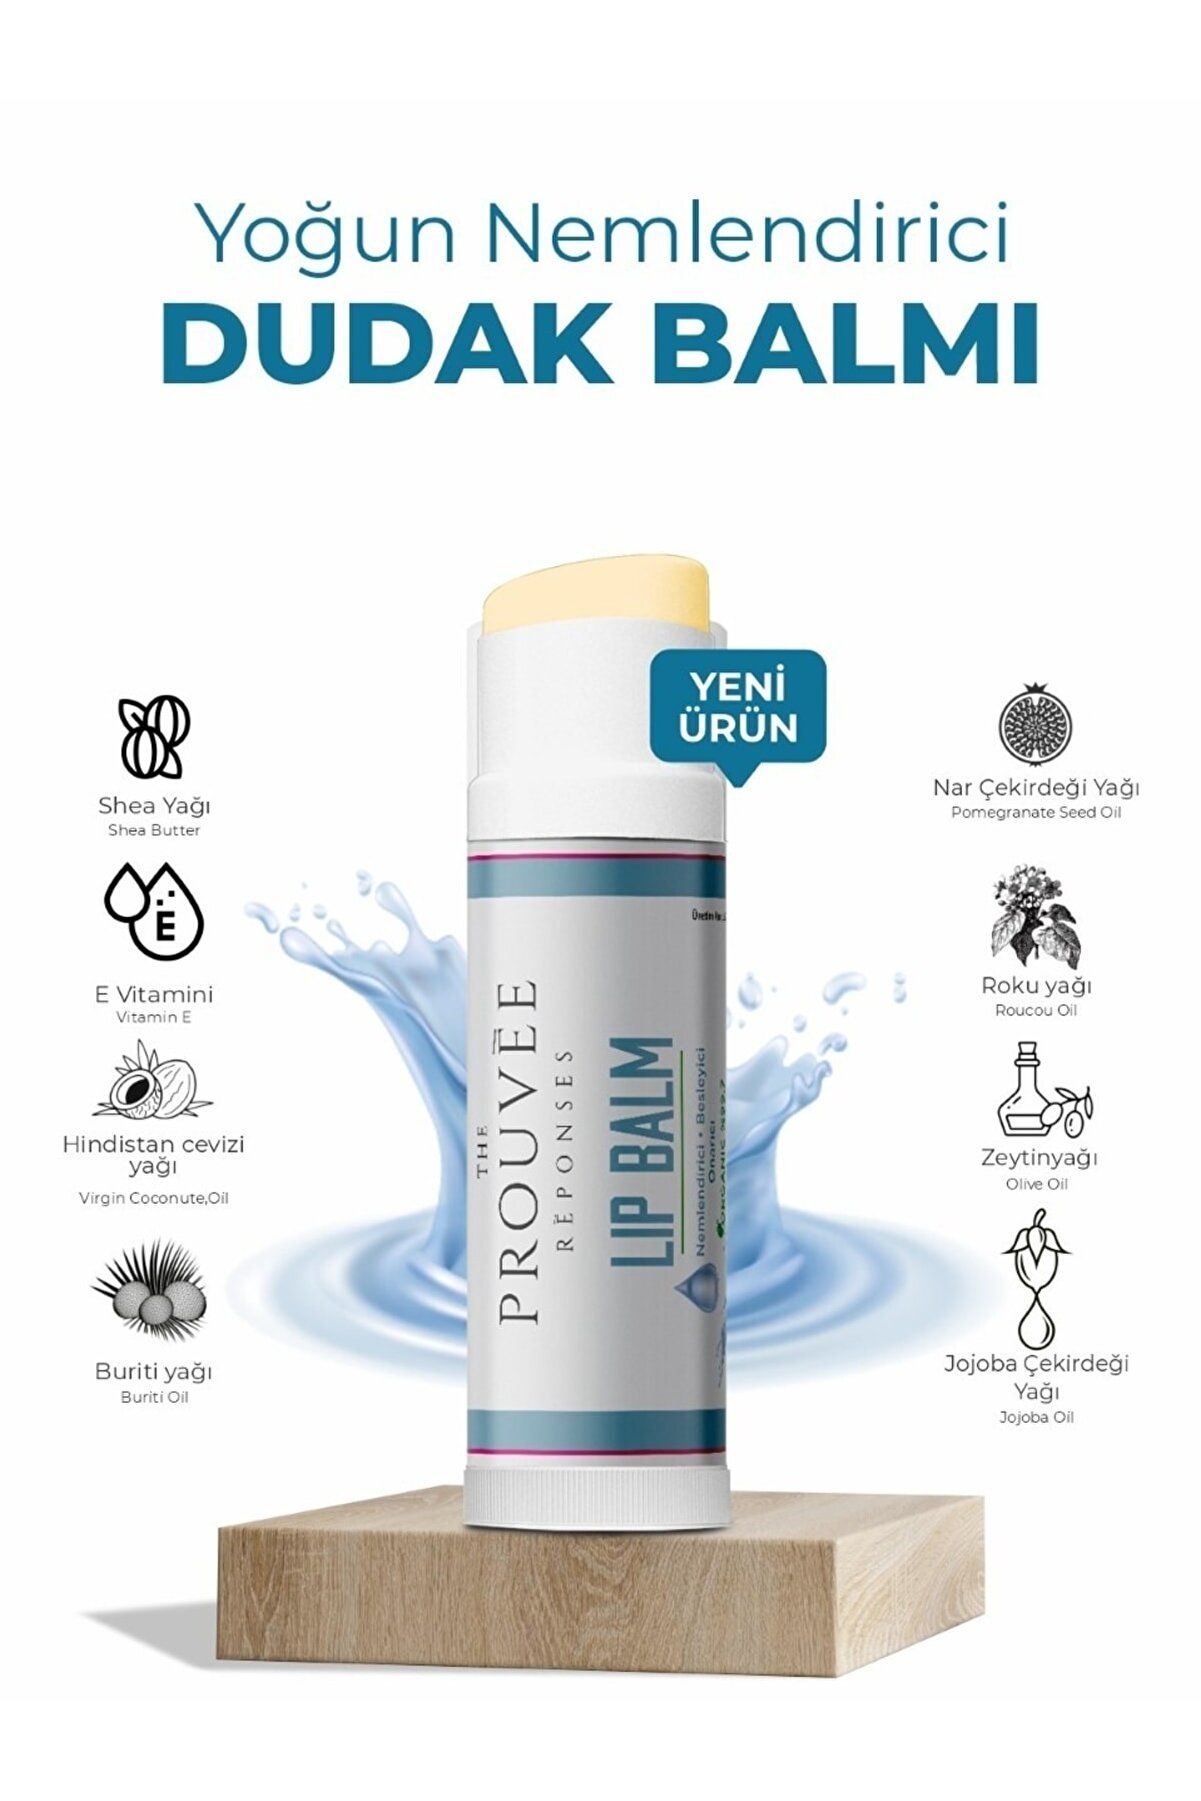 The Prouvee Reponses Aromasız Klasik Organik Içerikli Dudak Bakım Kremi 5ml - Classic Lip Balm 5ml